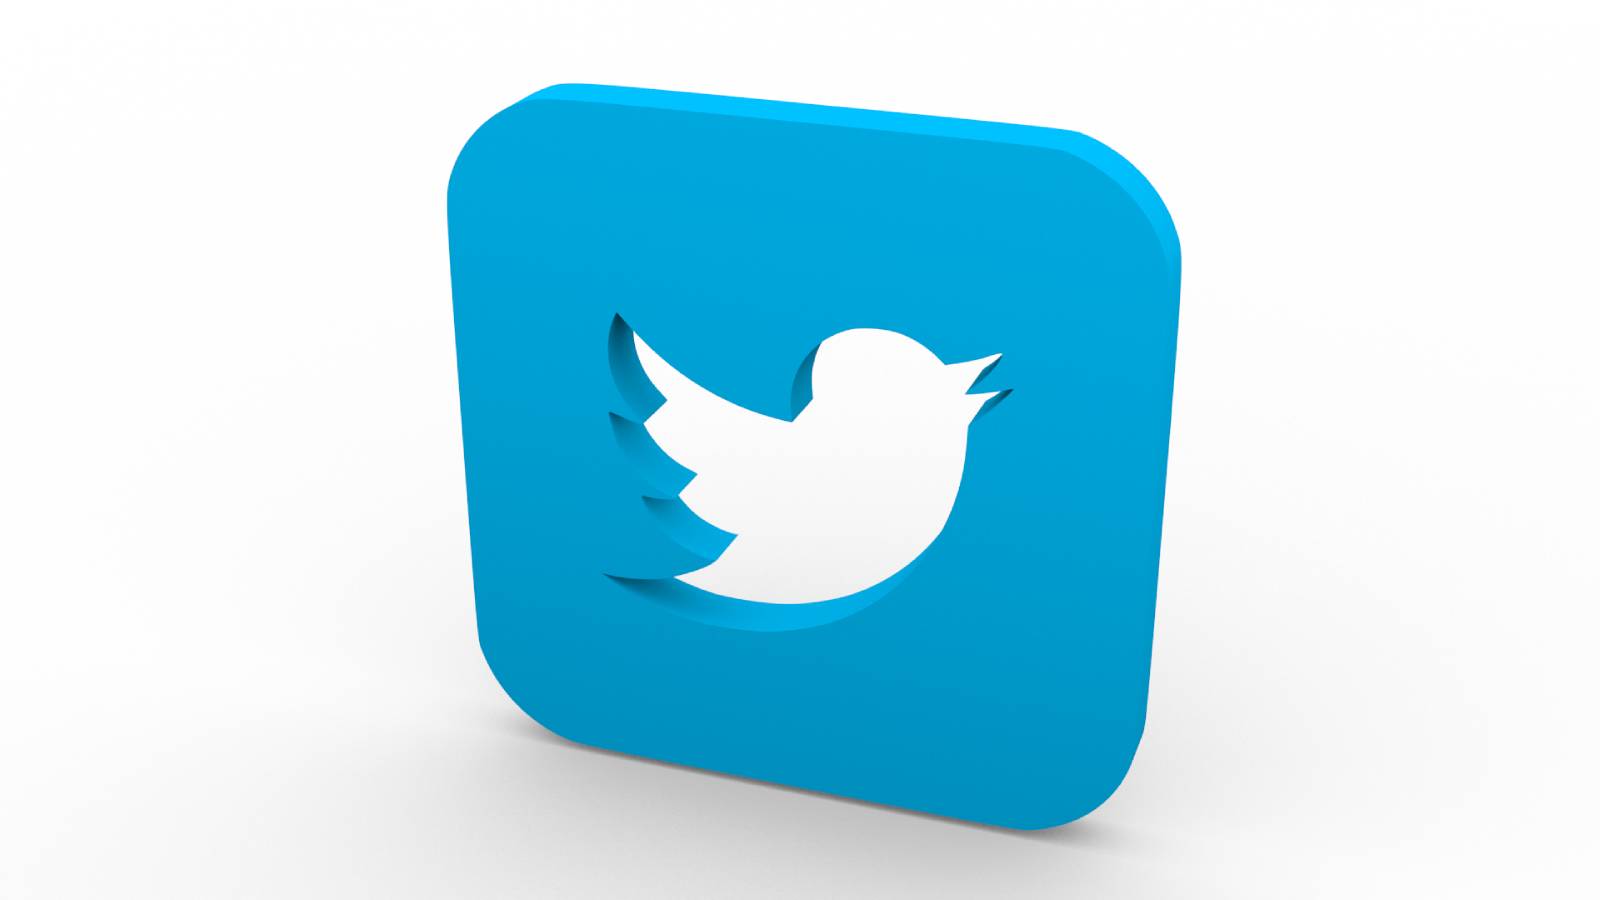 Twitter acquiert Revue, start-up spécialisée dans la newsletter